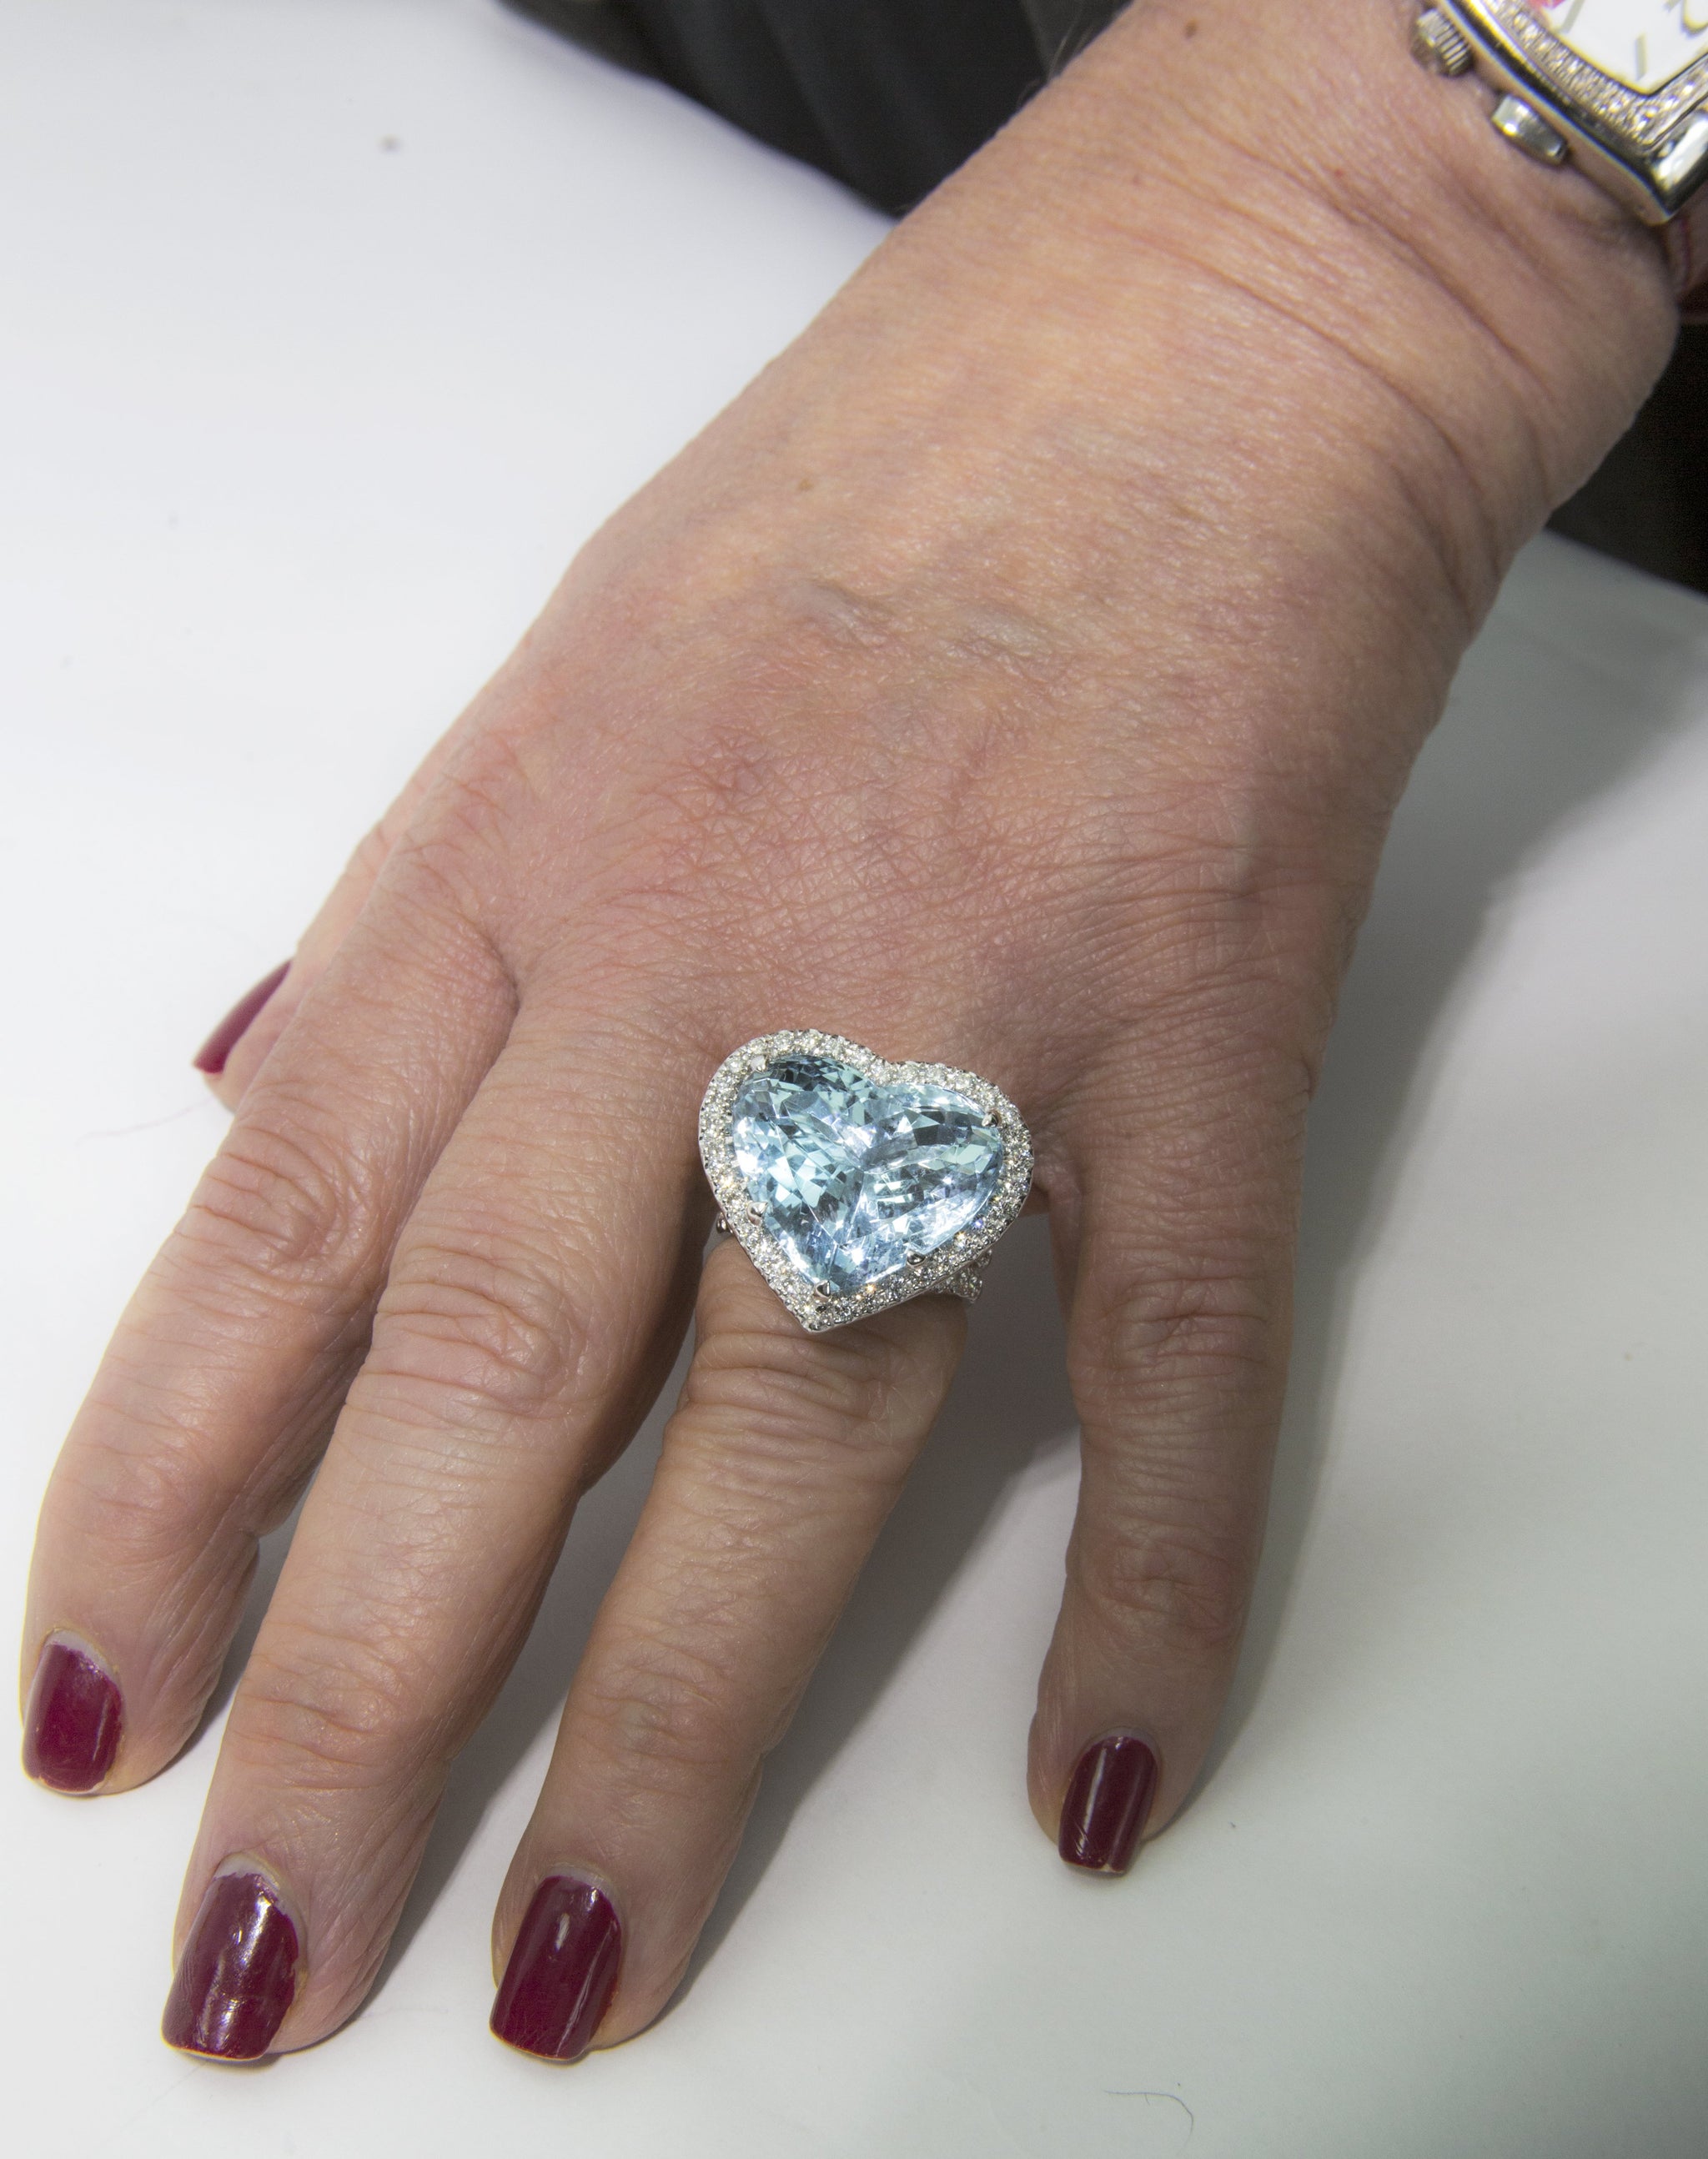 5 Carat Heart Shaped Diamond Ring